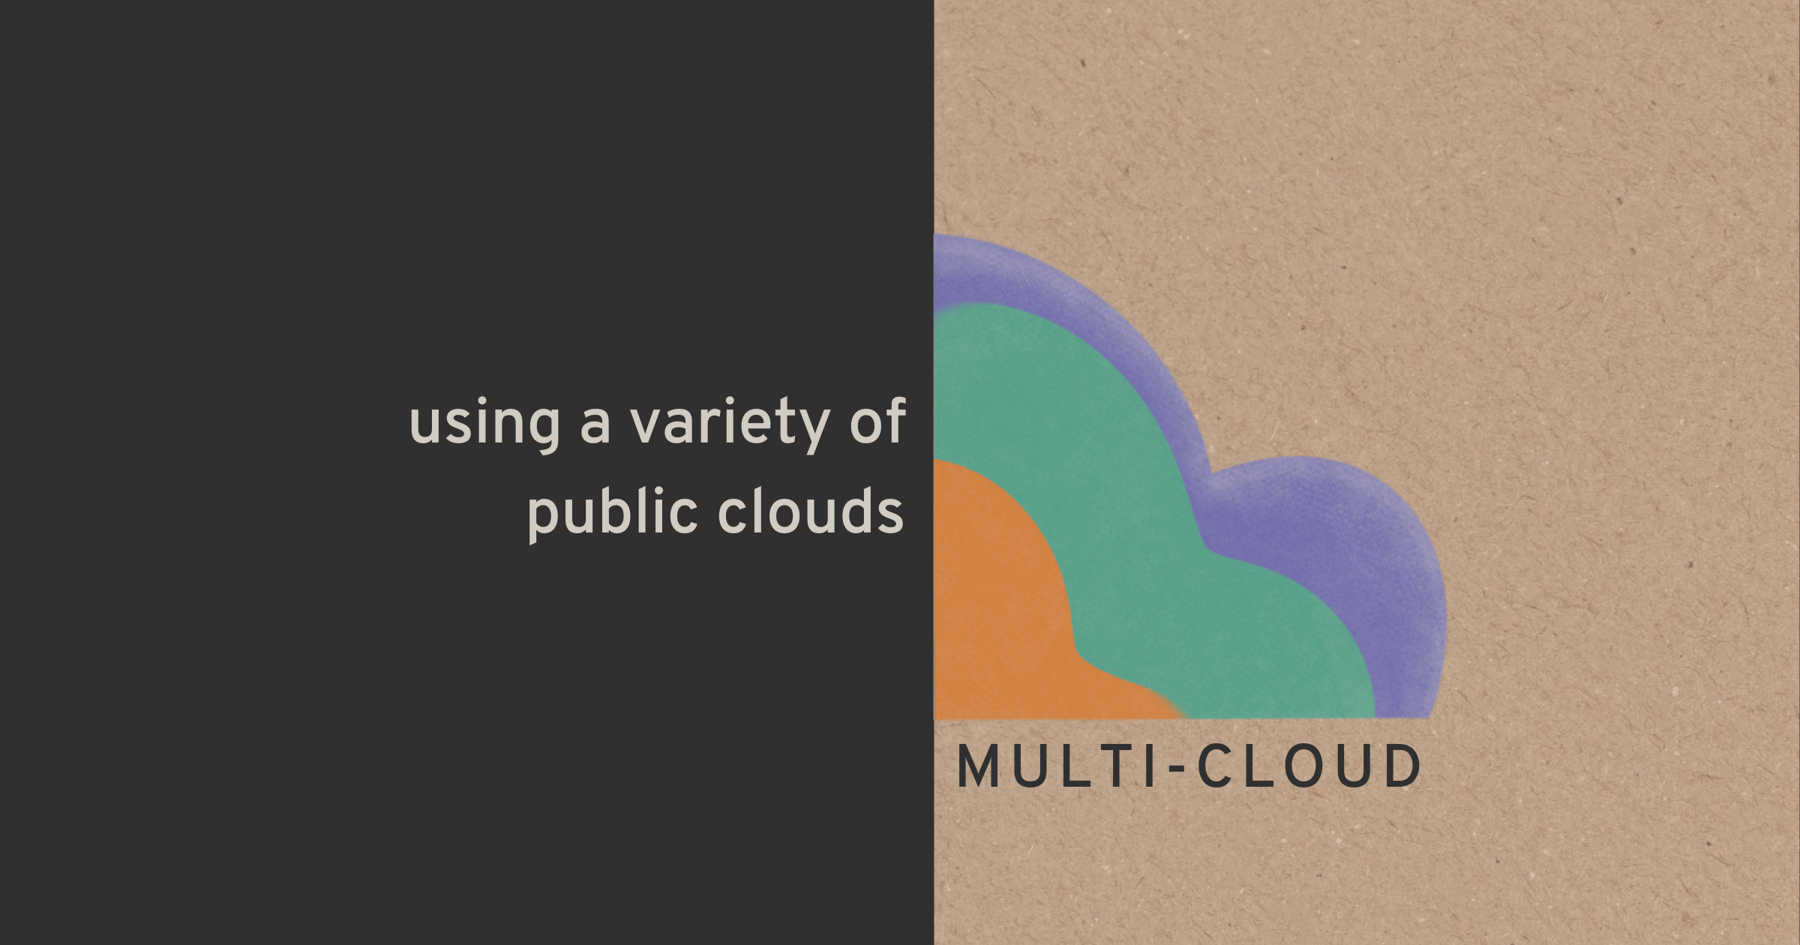 a graphic describing multi-cloud